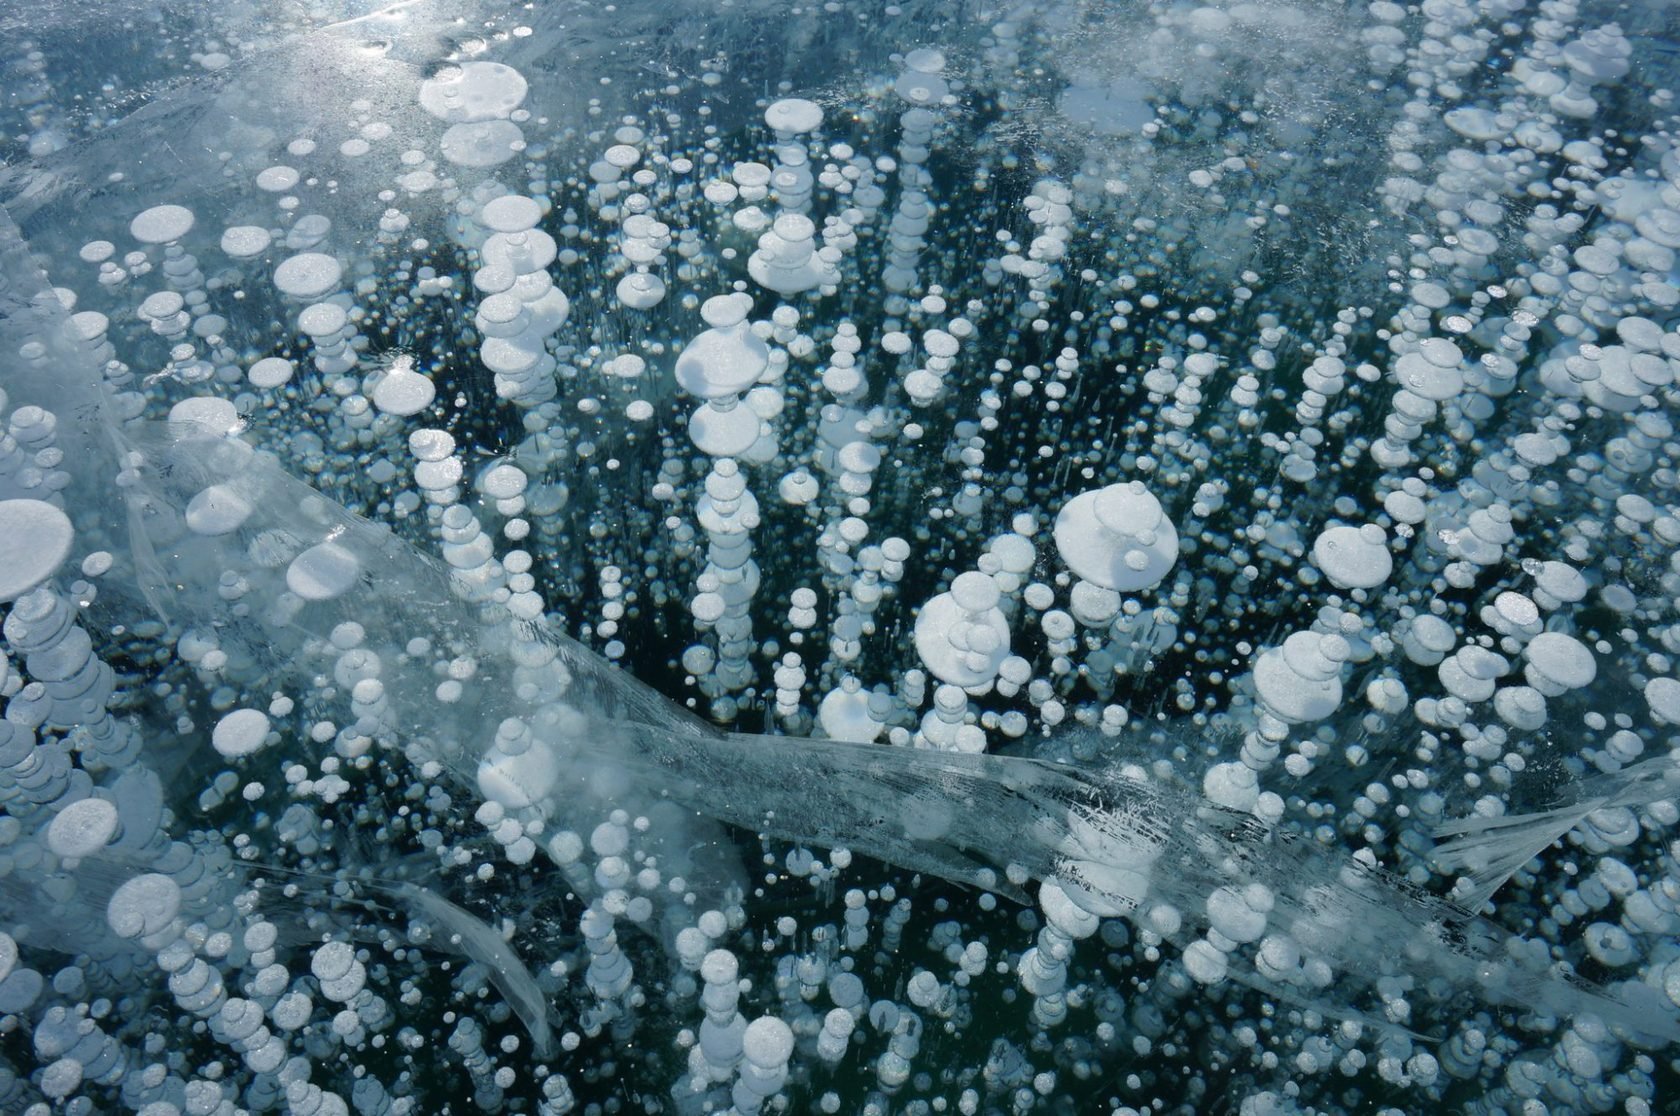 Пузырьки на байкале. Метановые пузырьки на Байкале. Метановые пузыри на Байкале. Метановые пузыри во льду Байкала. Голоустное Байкал пузырьки.